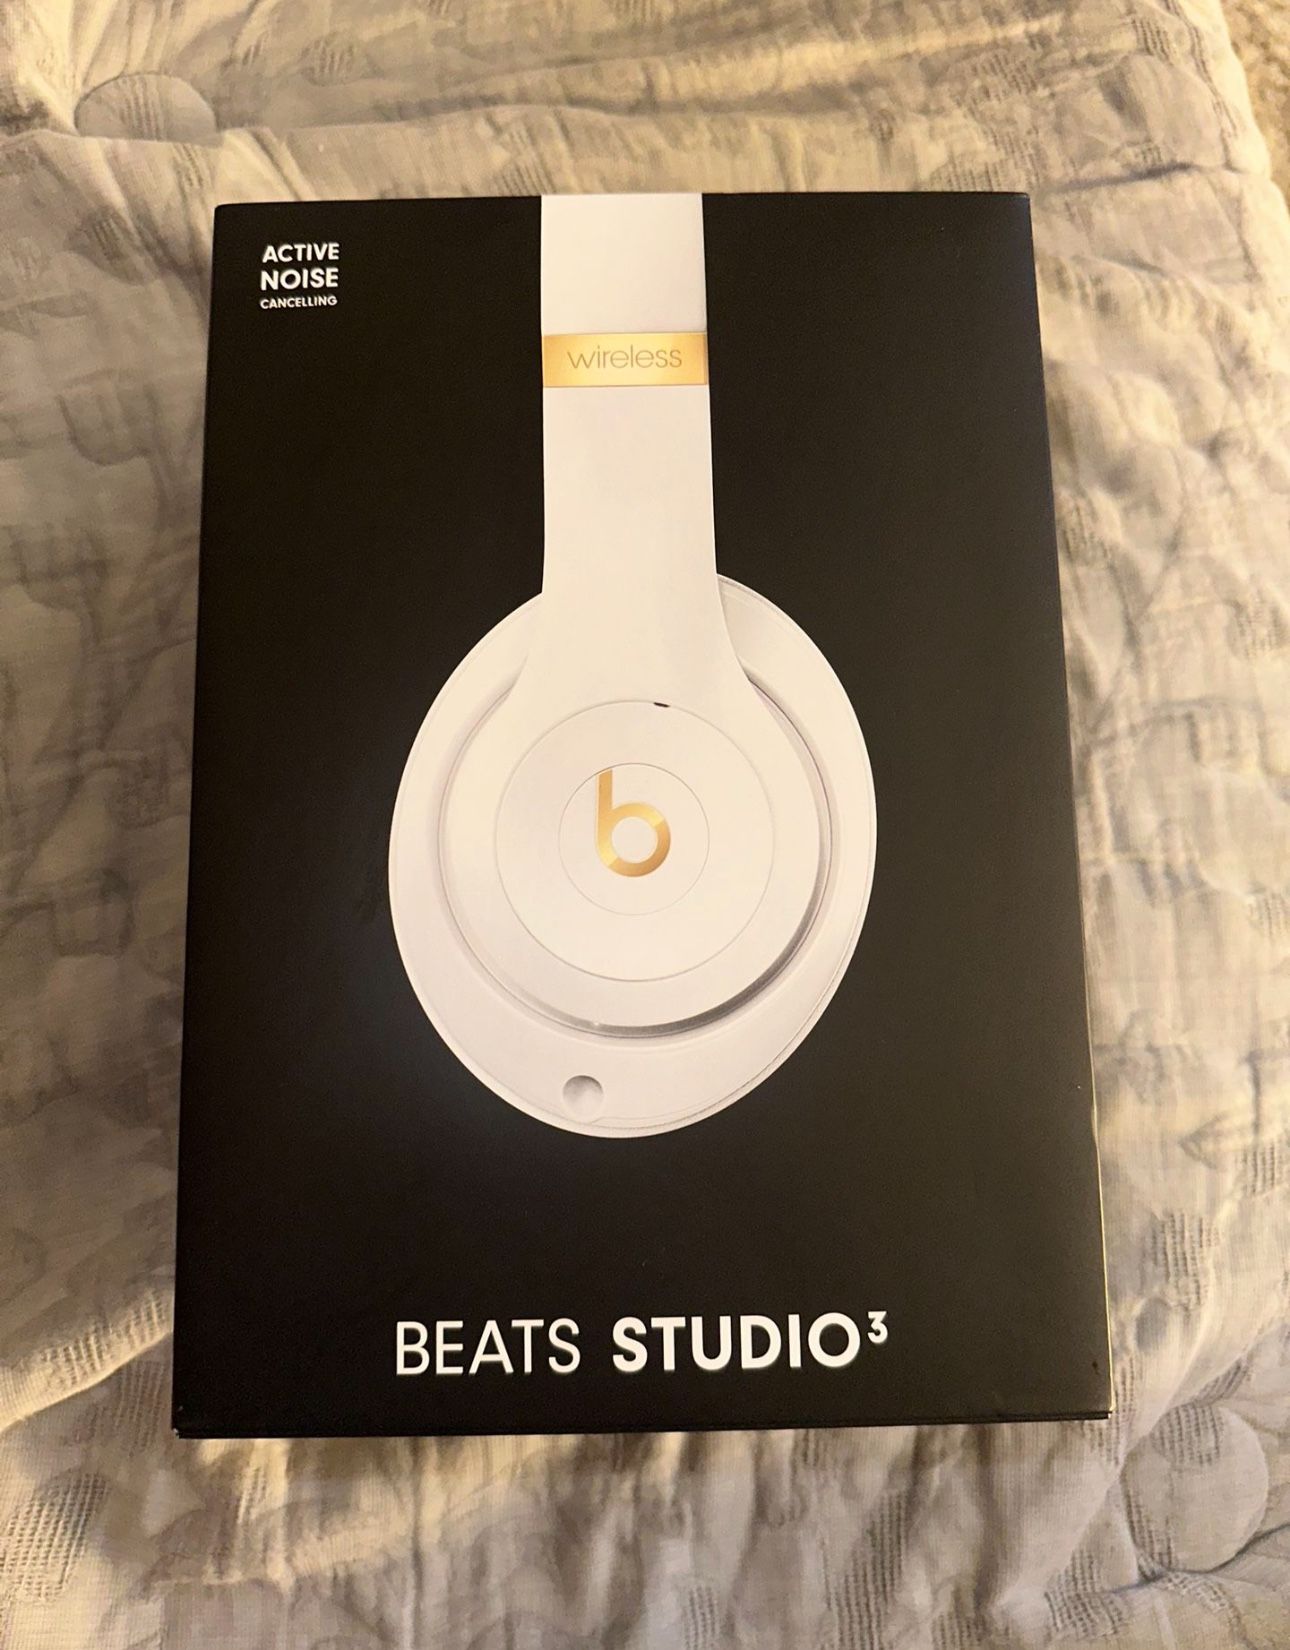 Beats Studio 3’s